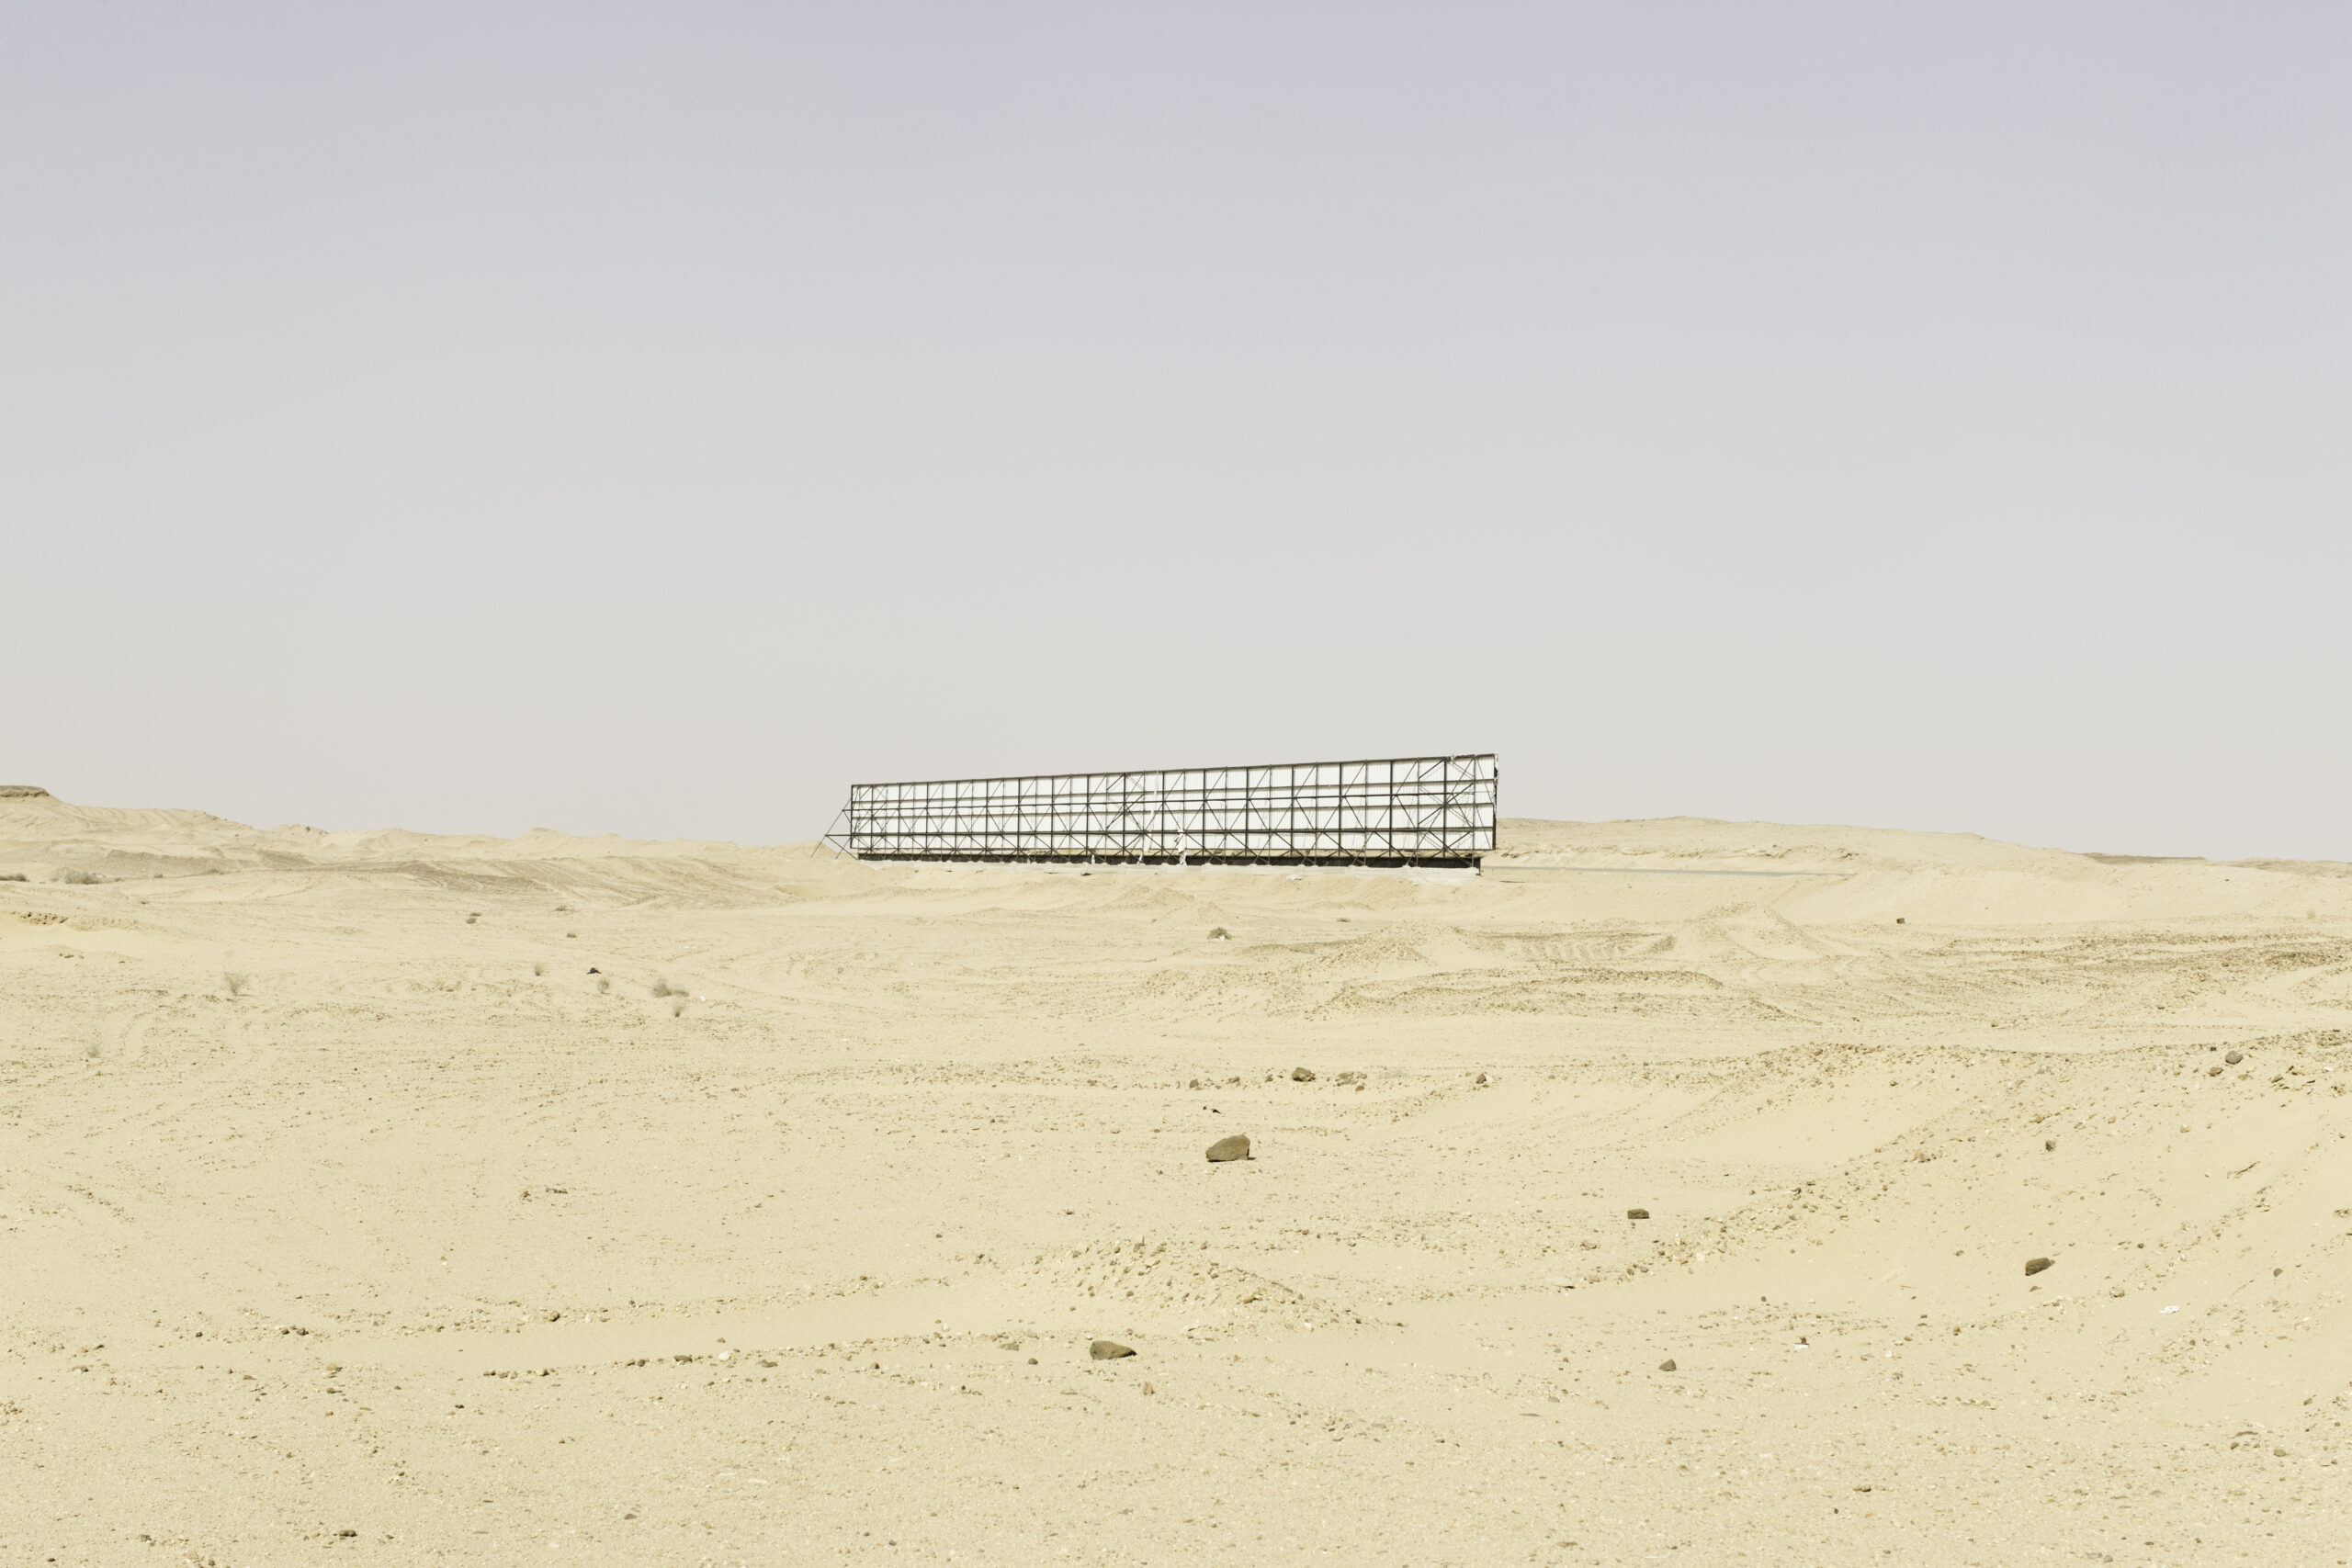 Lone billboard in the middle of a desert landscape